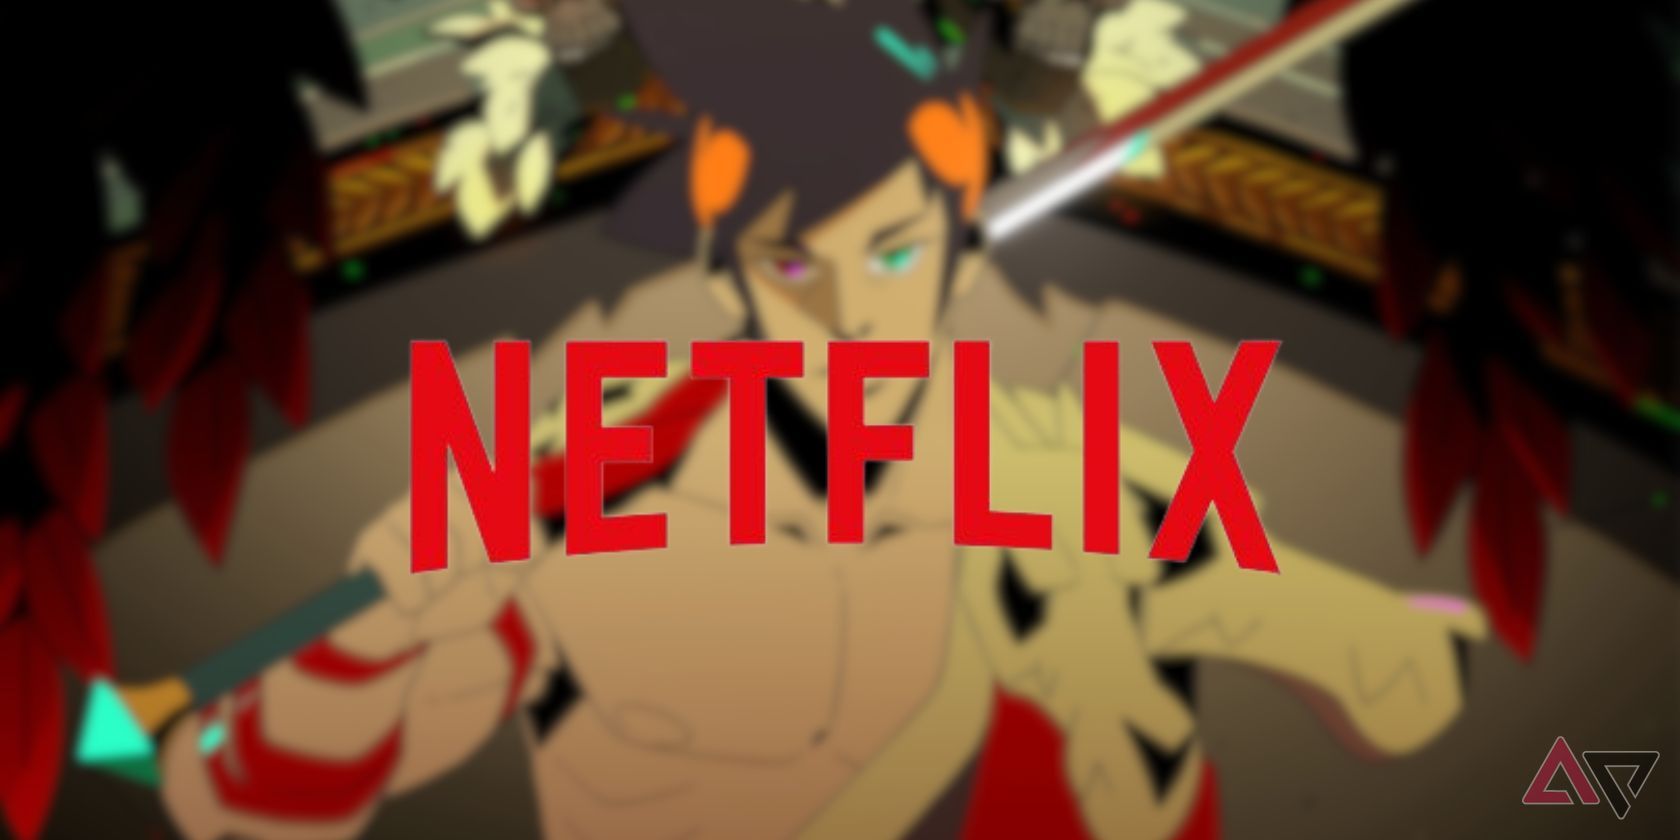 Hades is coming to iOS via Netflix next year - Xfire